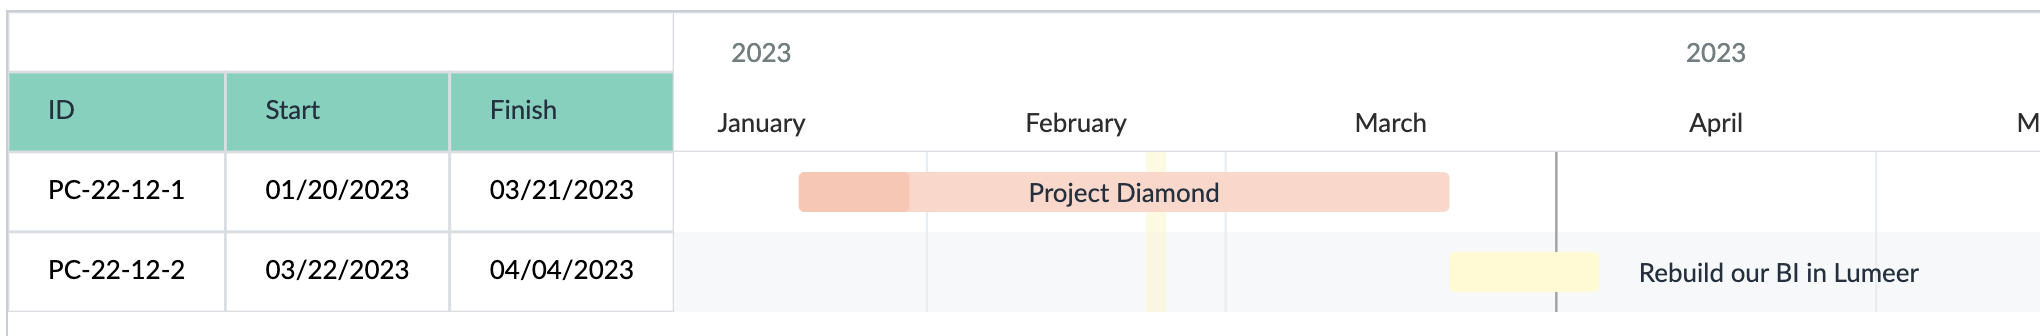 projects progress on a timeline